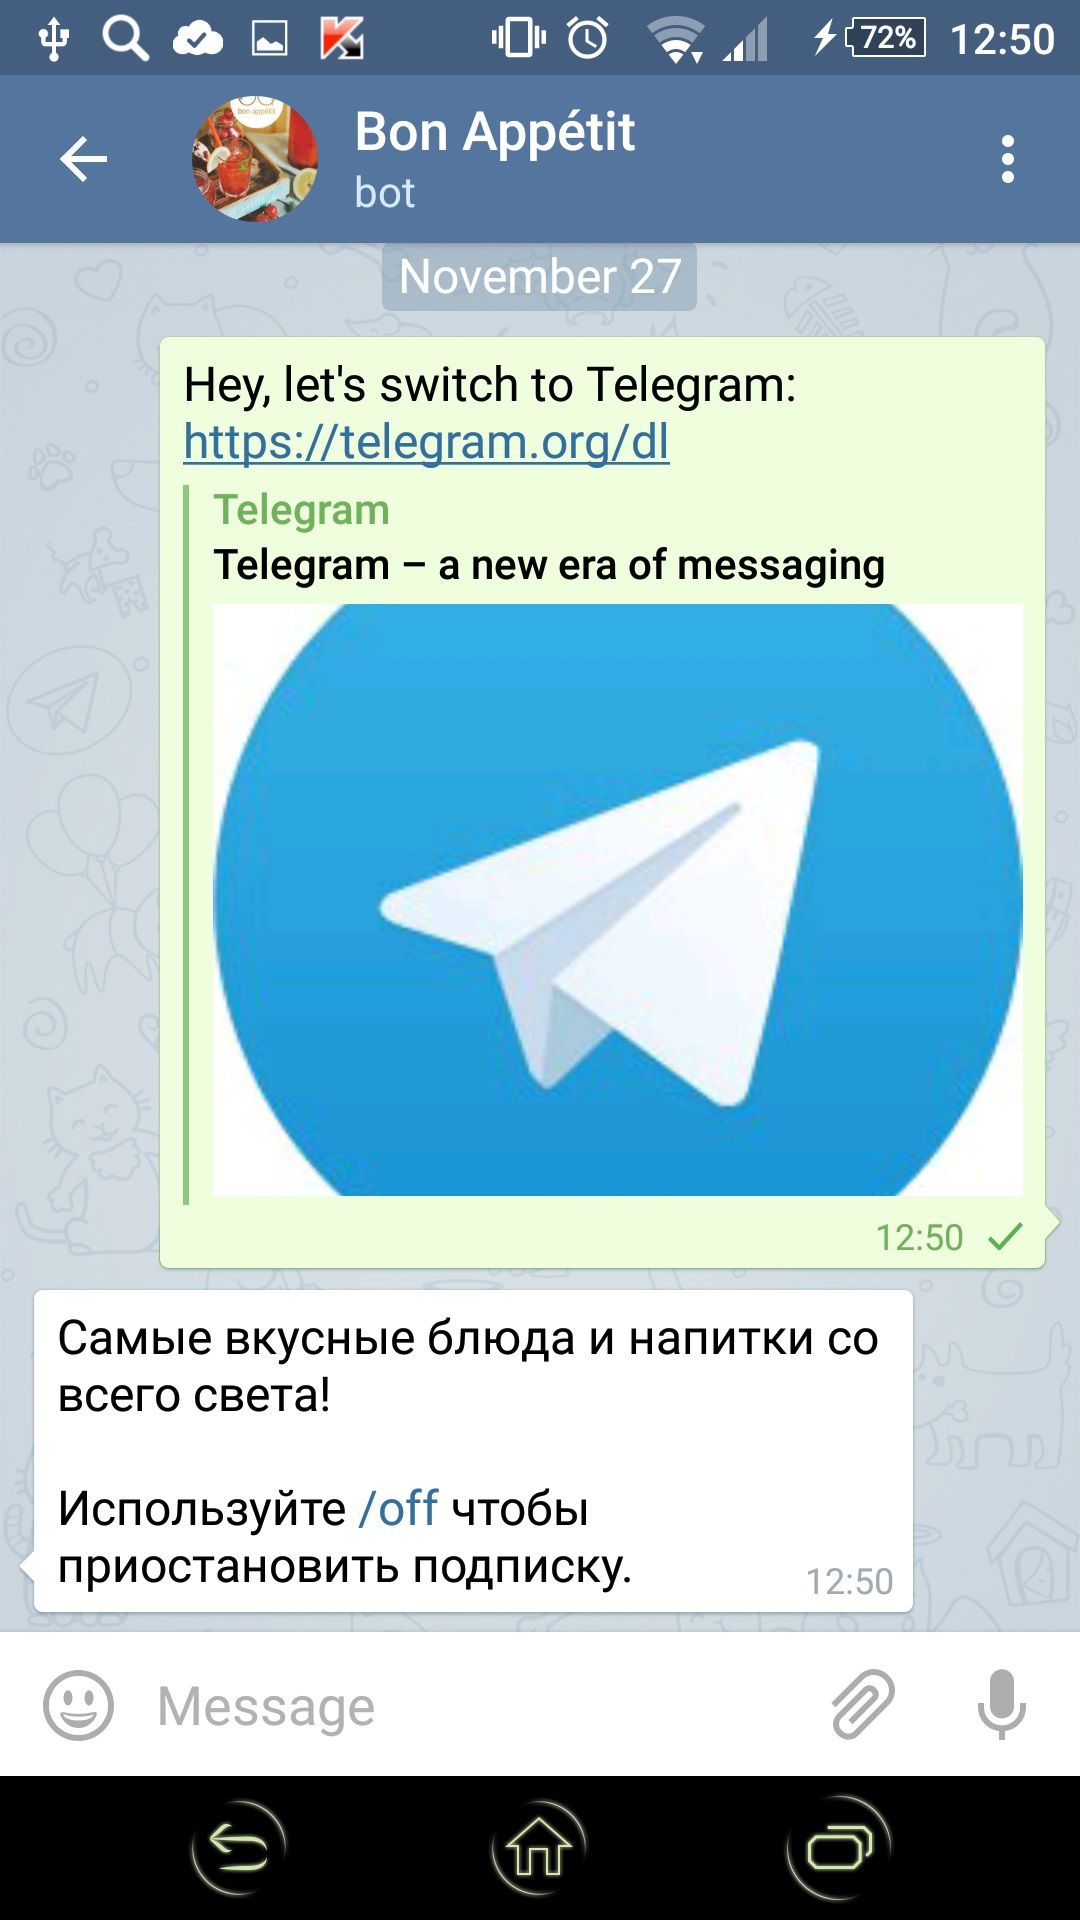 Установка русского языка телеграмм андроид фото 62